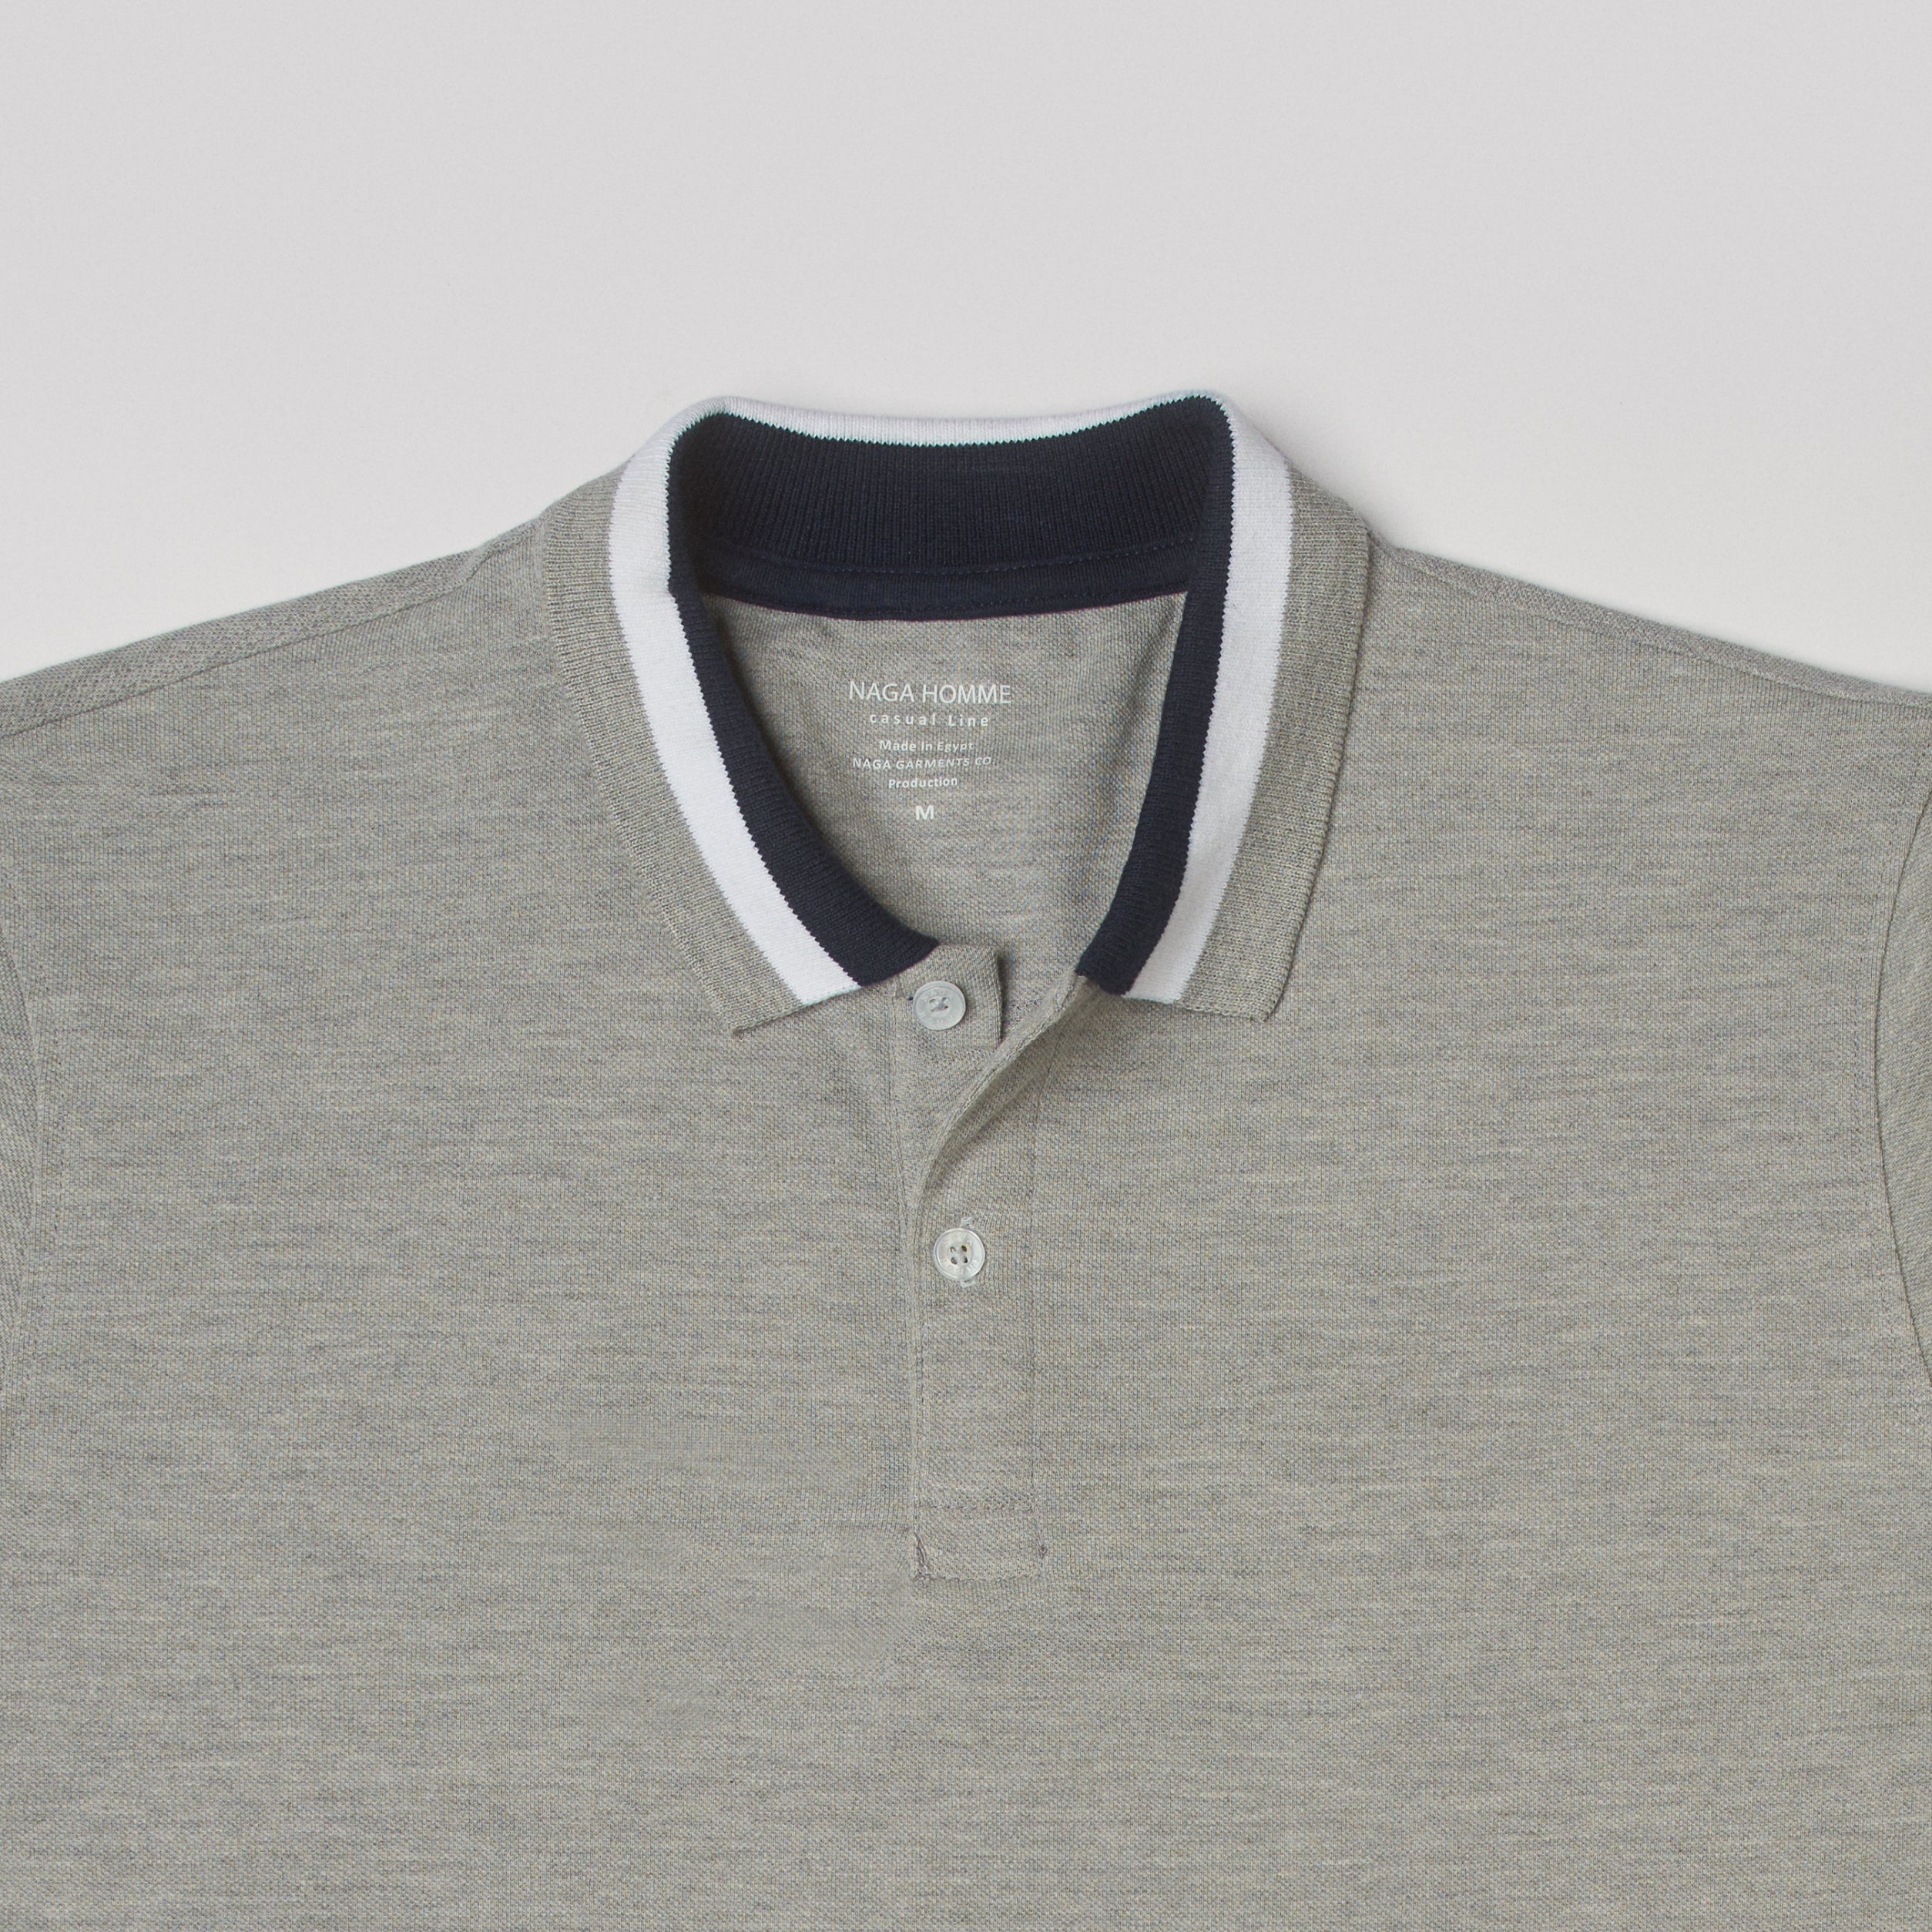 Light Grey Short Sleeves Polo(51)